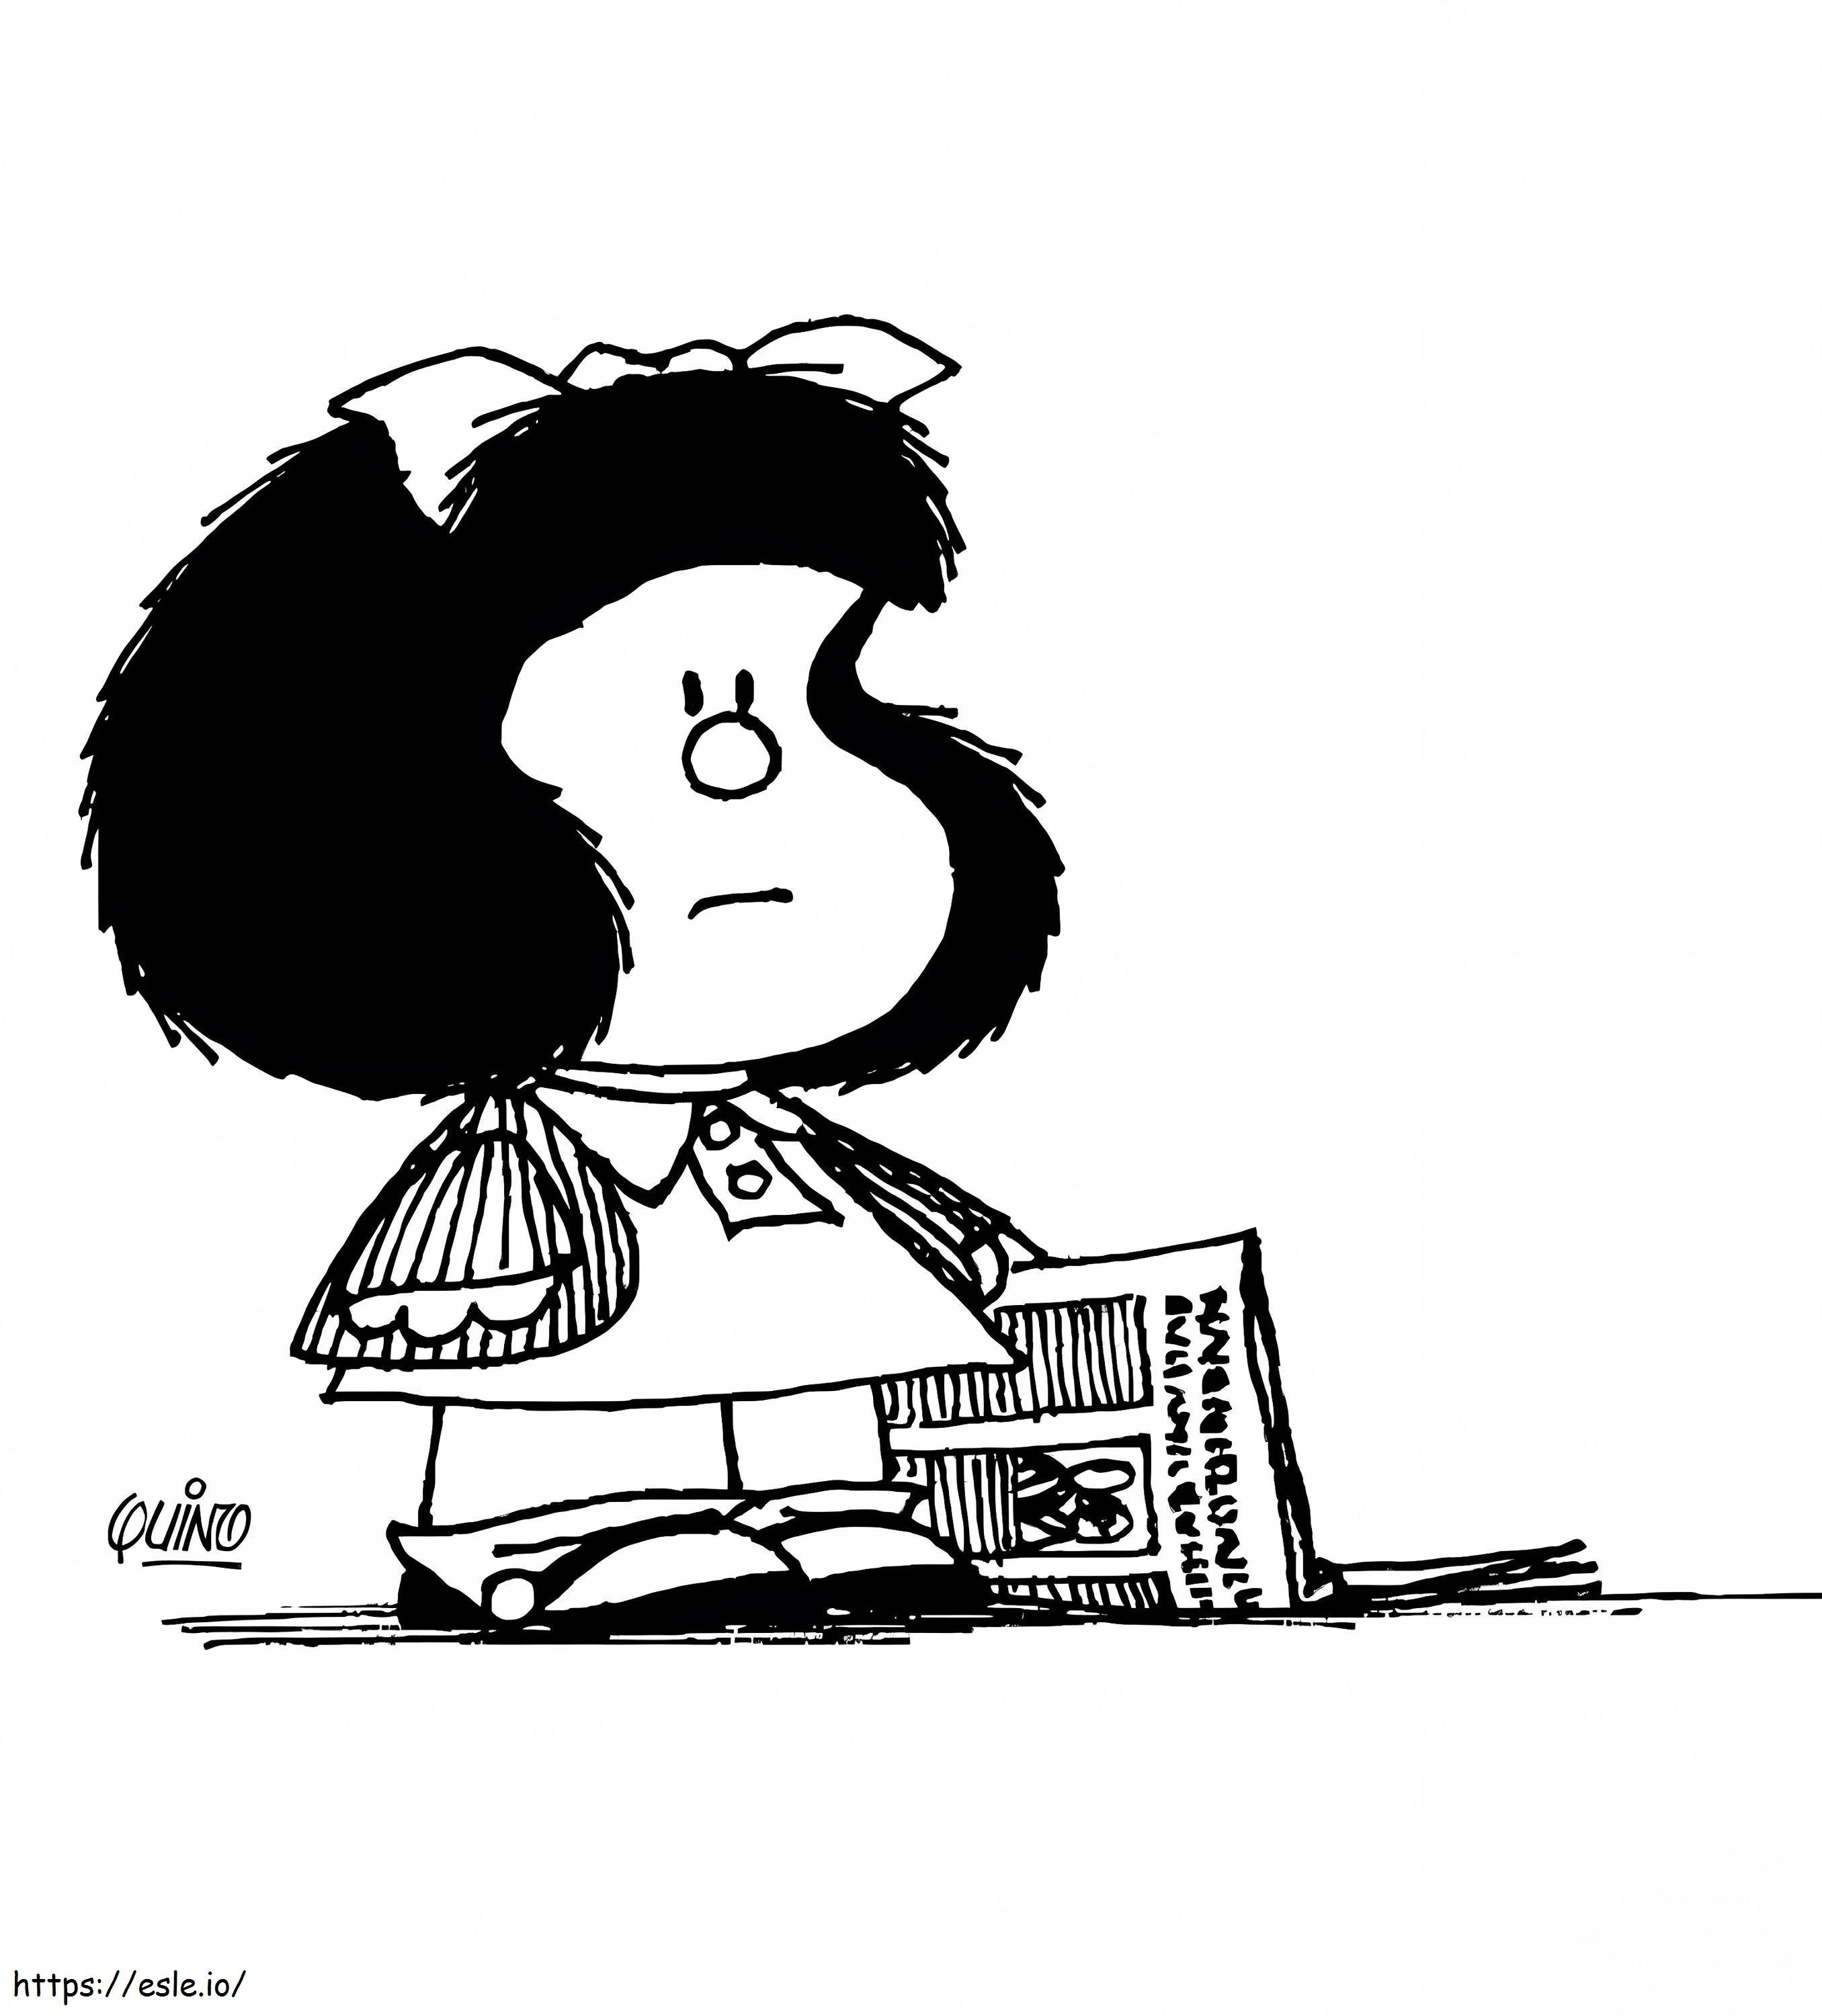 Mafalda com jornal para colorir